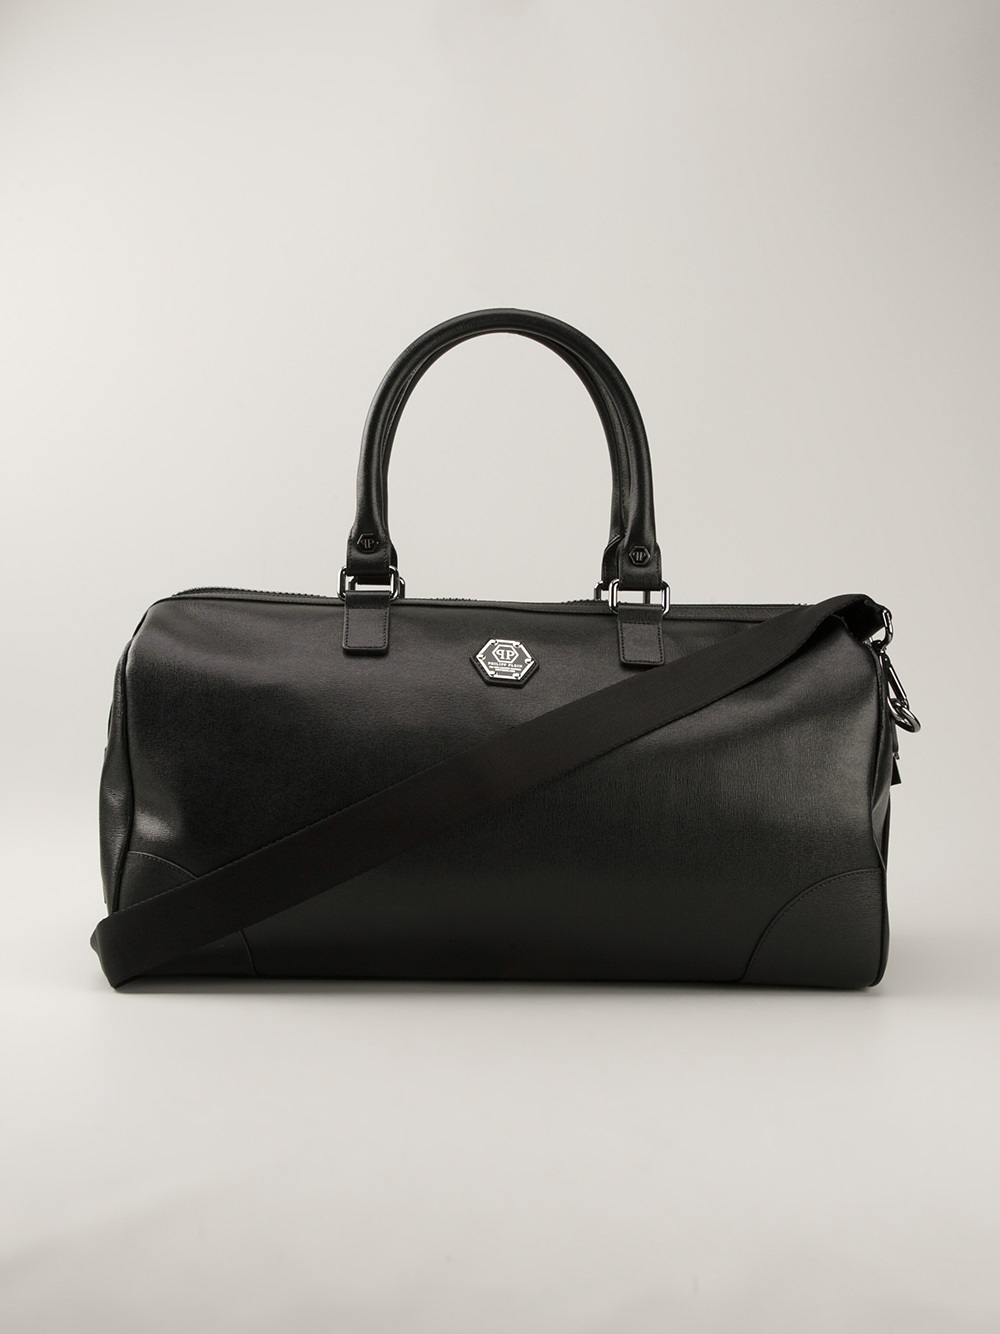 Lyst - Philipp Plein Skull Luggage Bag in Black for Men